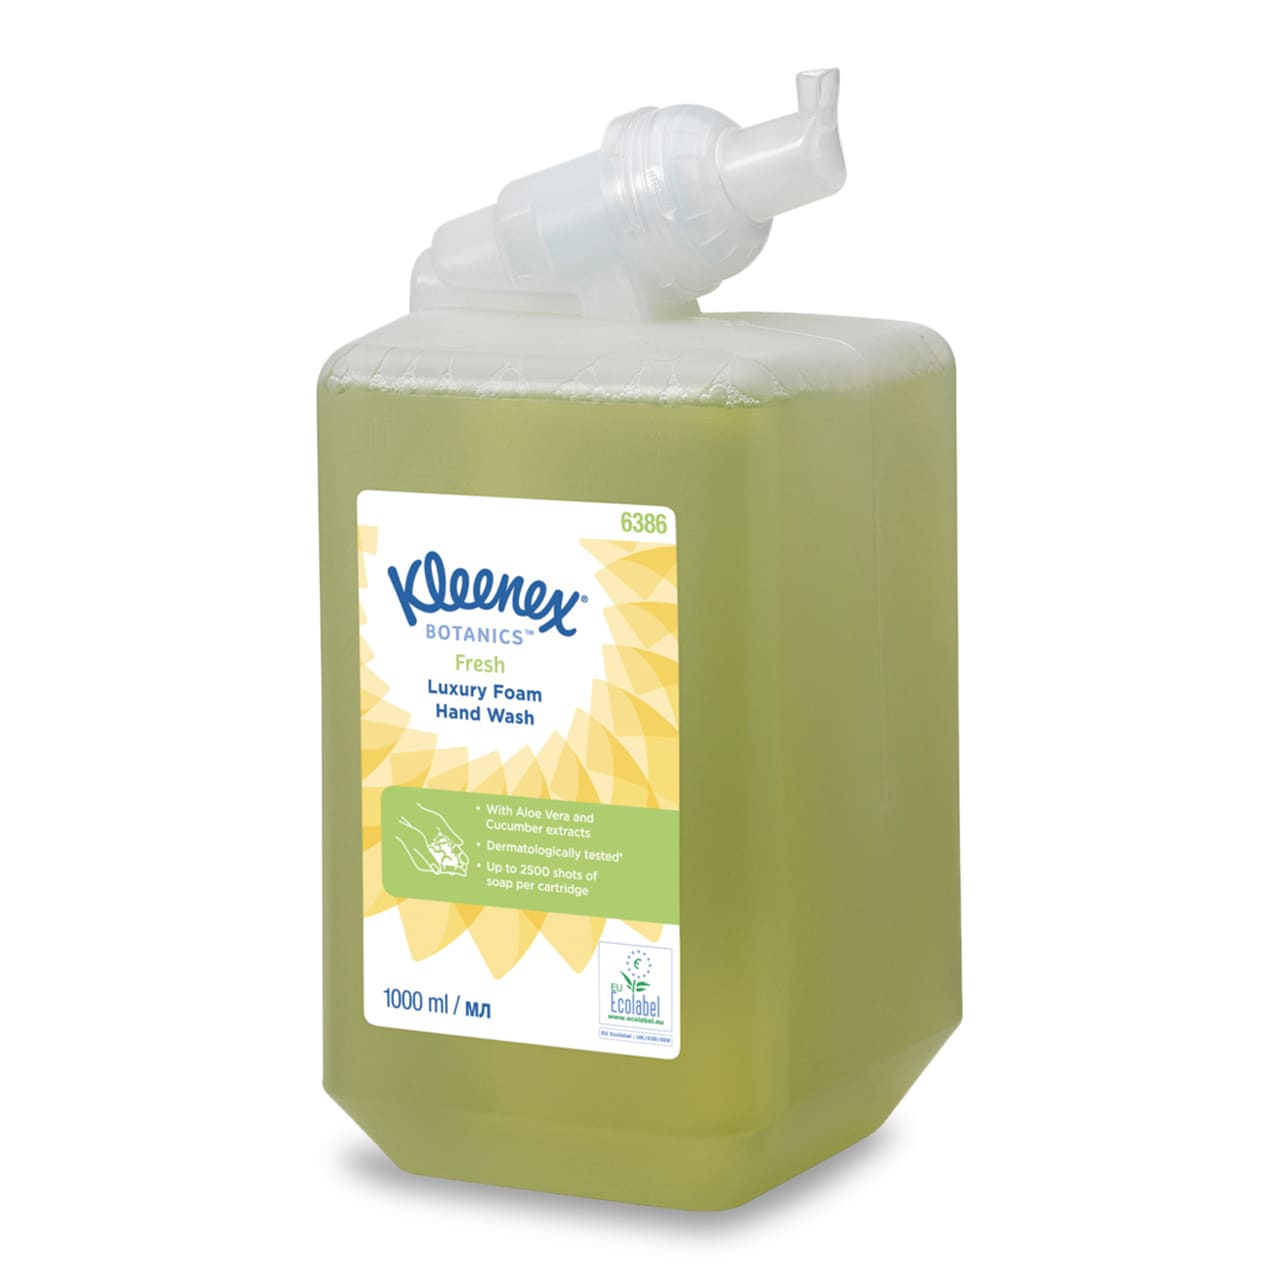 Kleenex® Botanics™ Fresh Luxus-Schaumseife